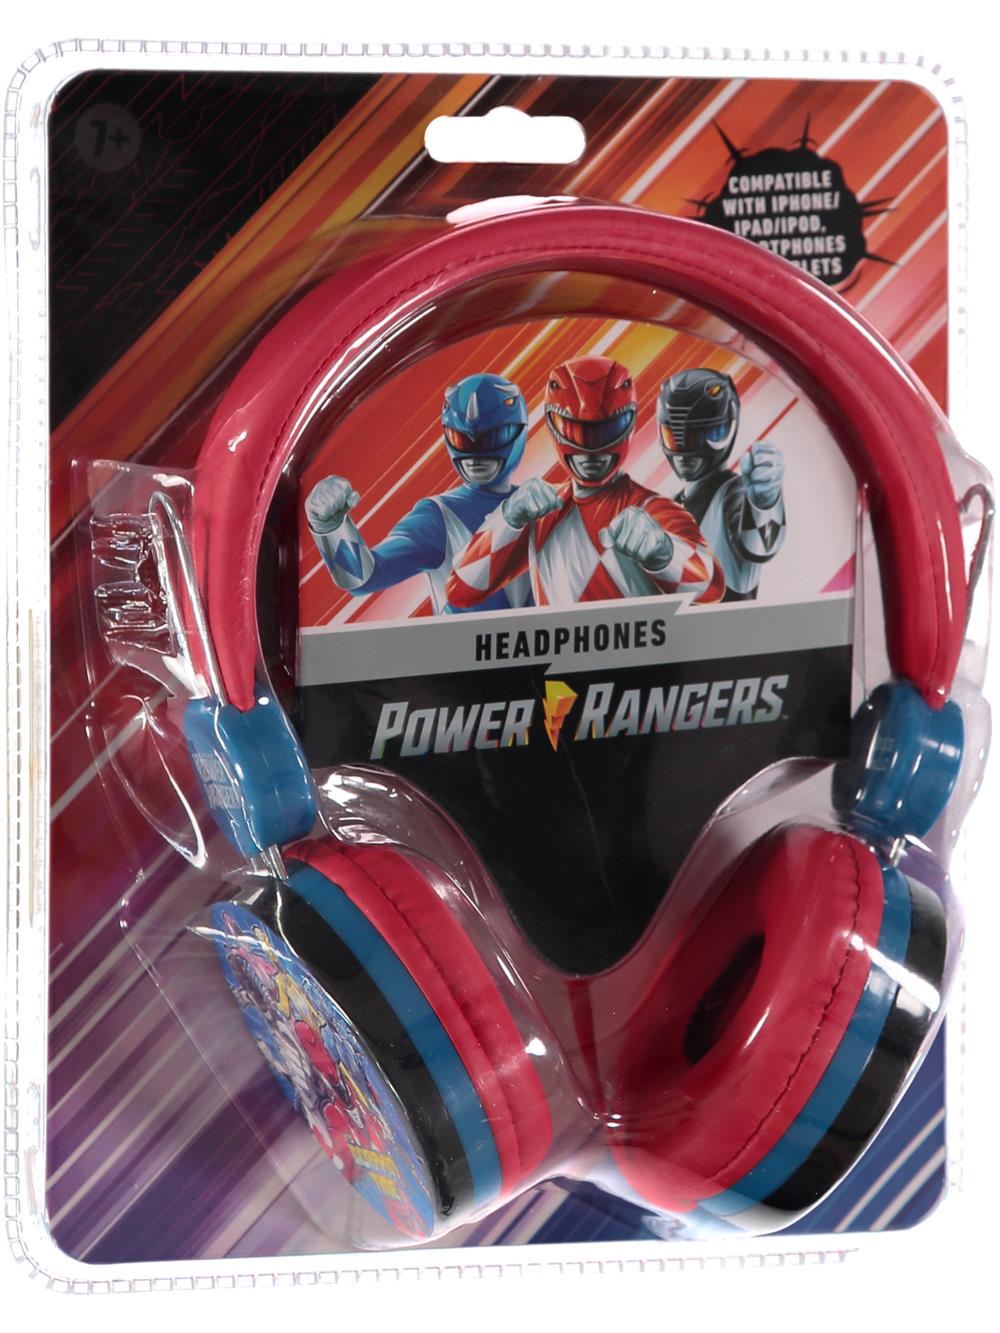 Power Rangers Over The Ear Headphones